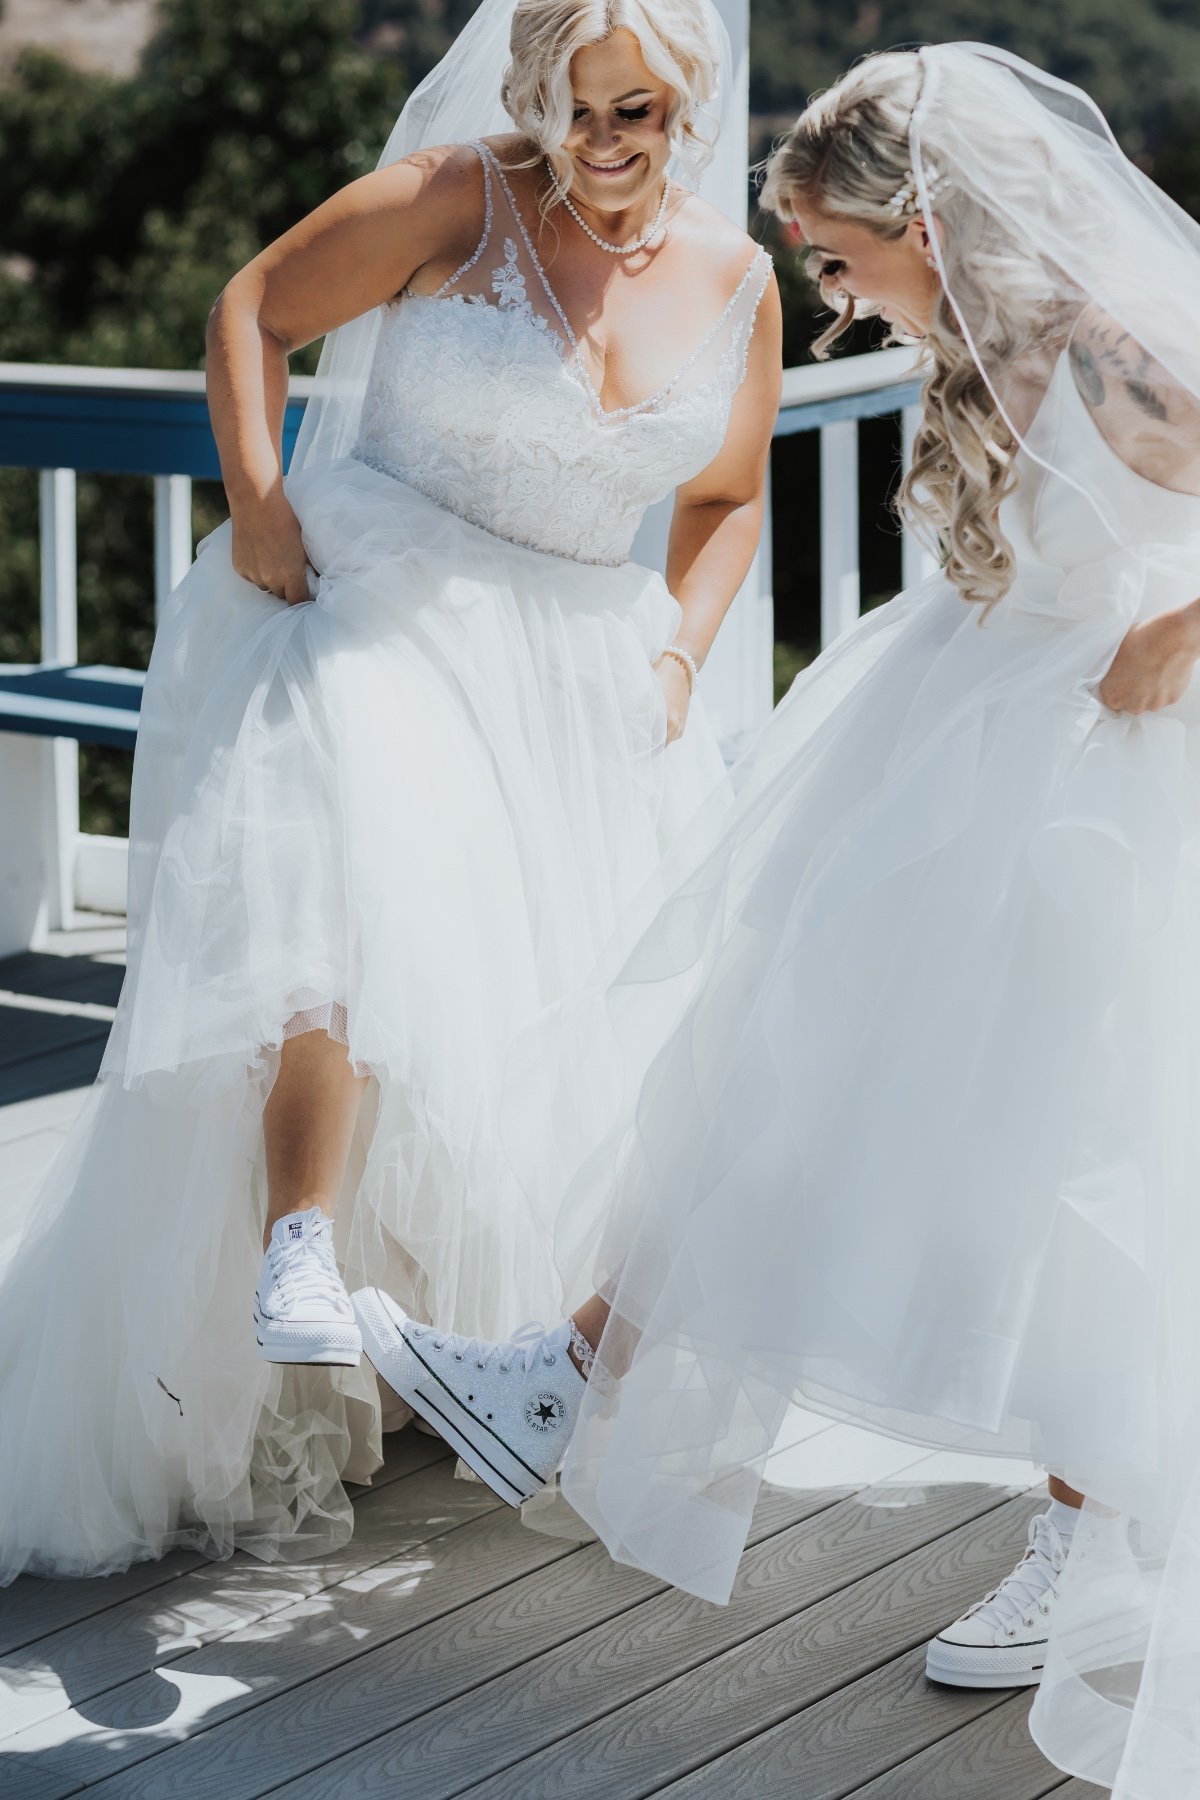 Brides in matching wedding converse